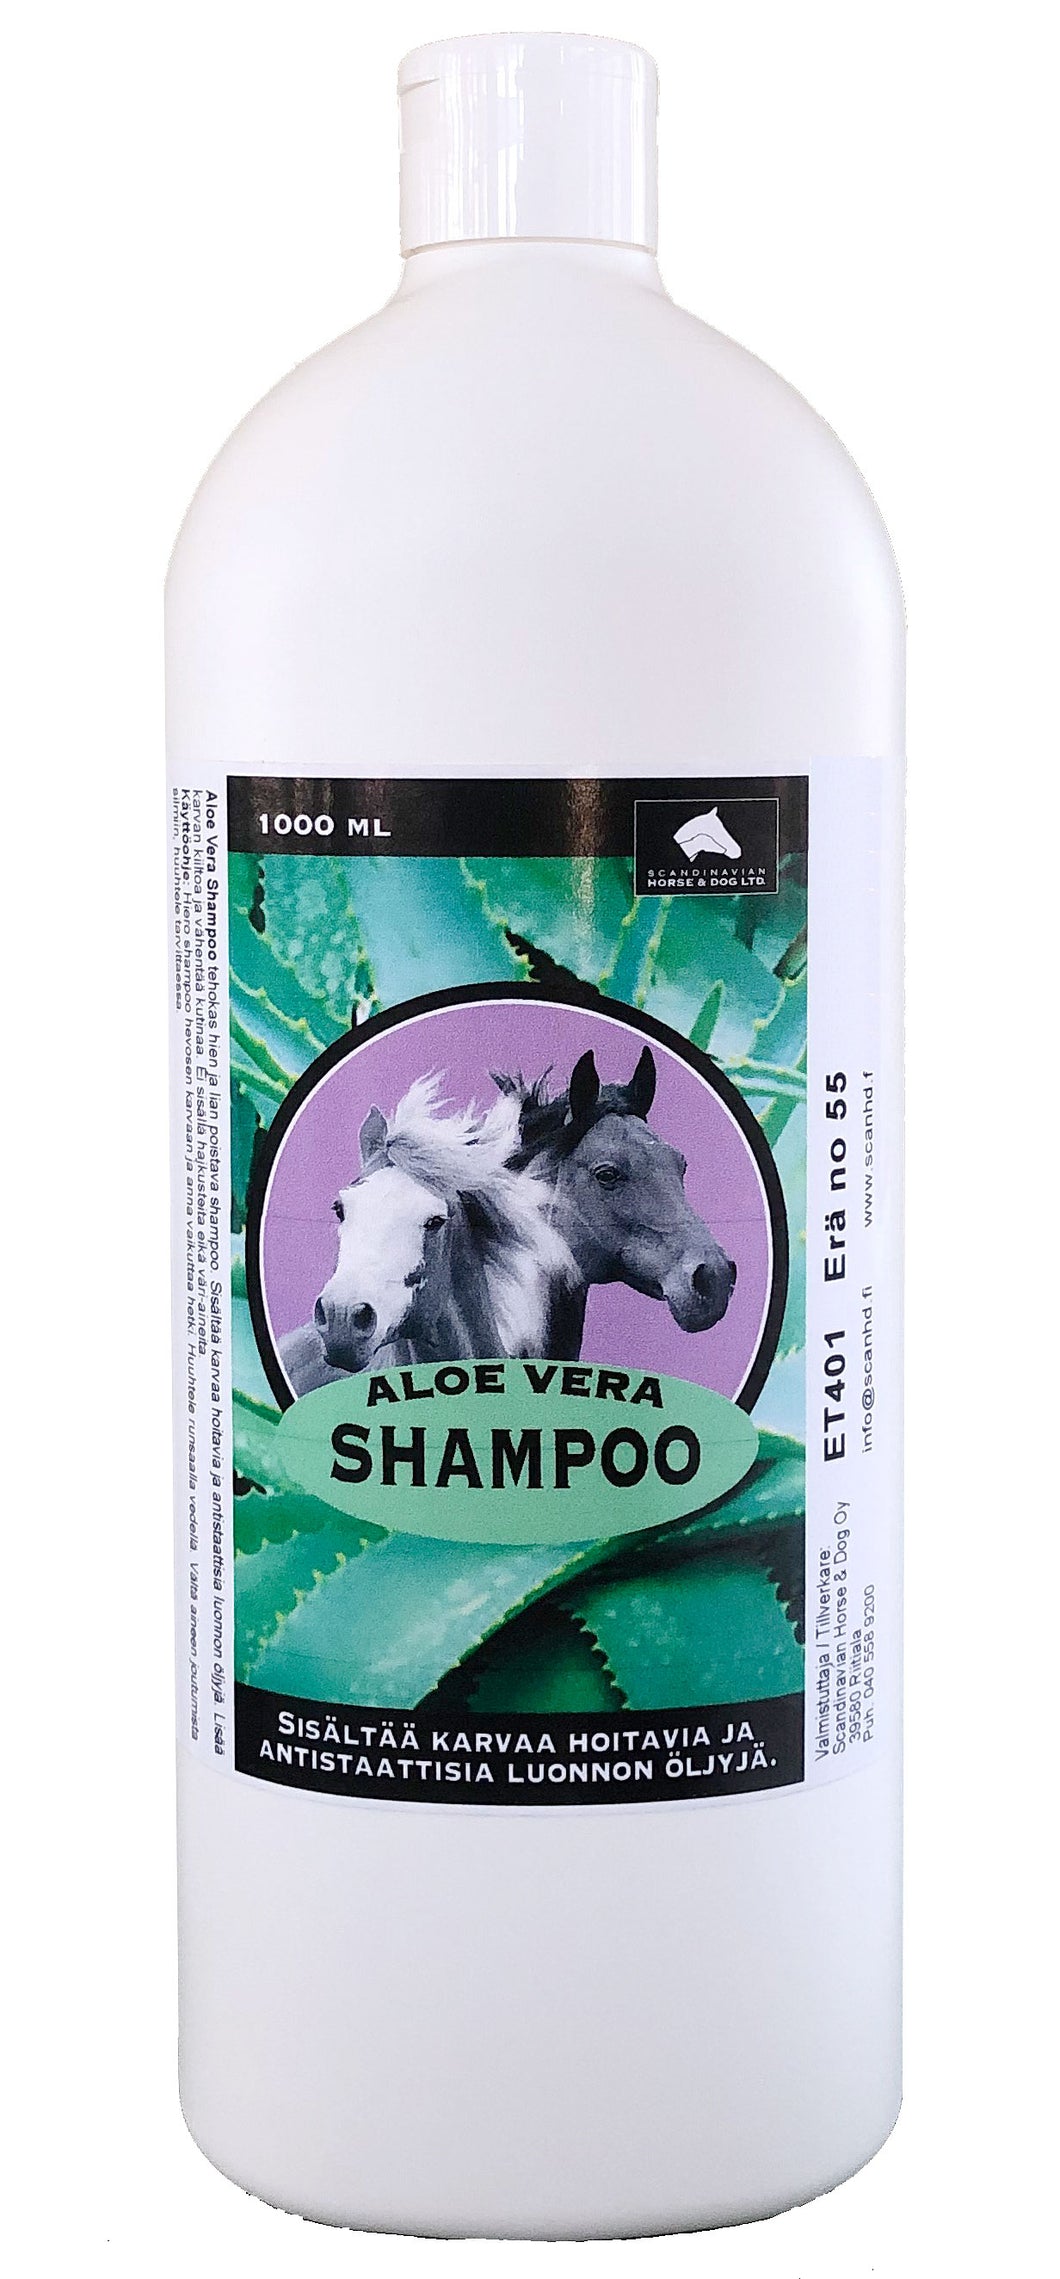 Aloe Vera Shampoo hevosille 1000 ml